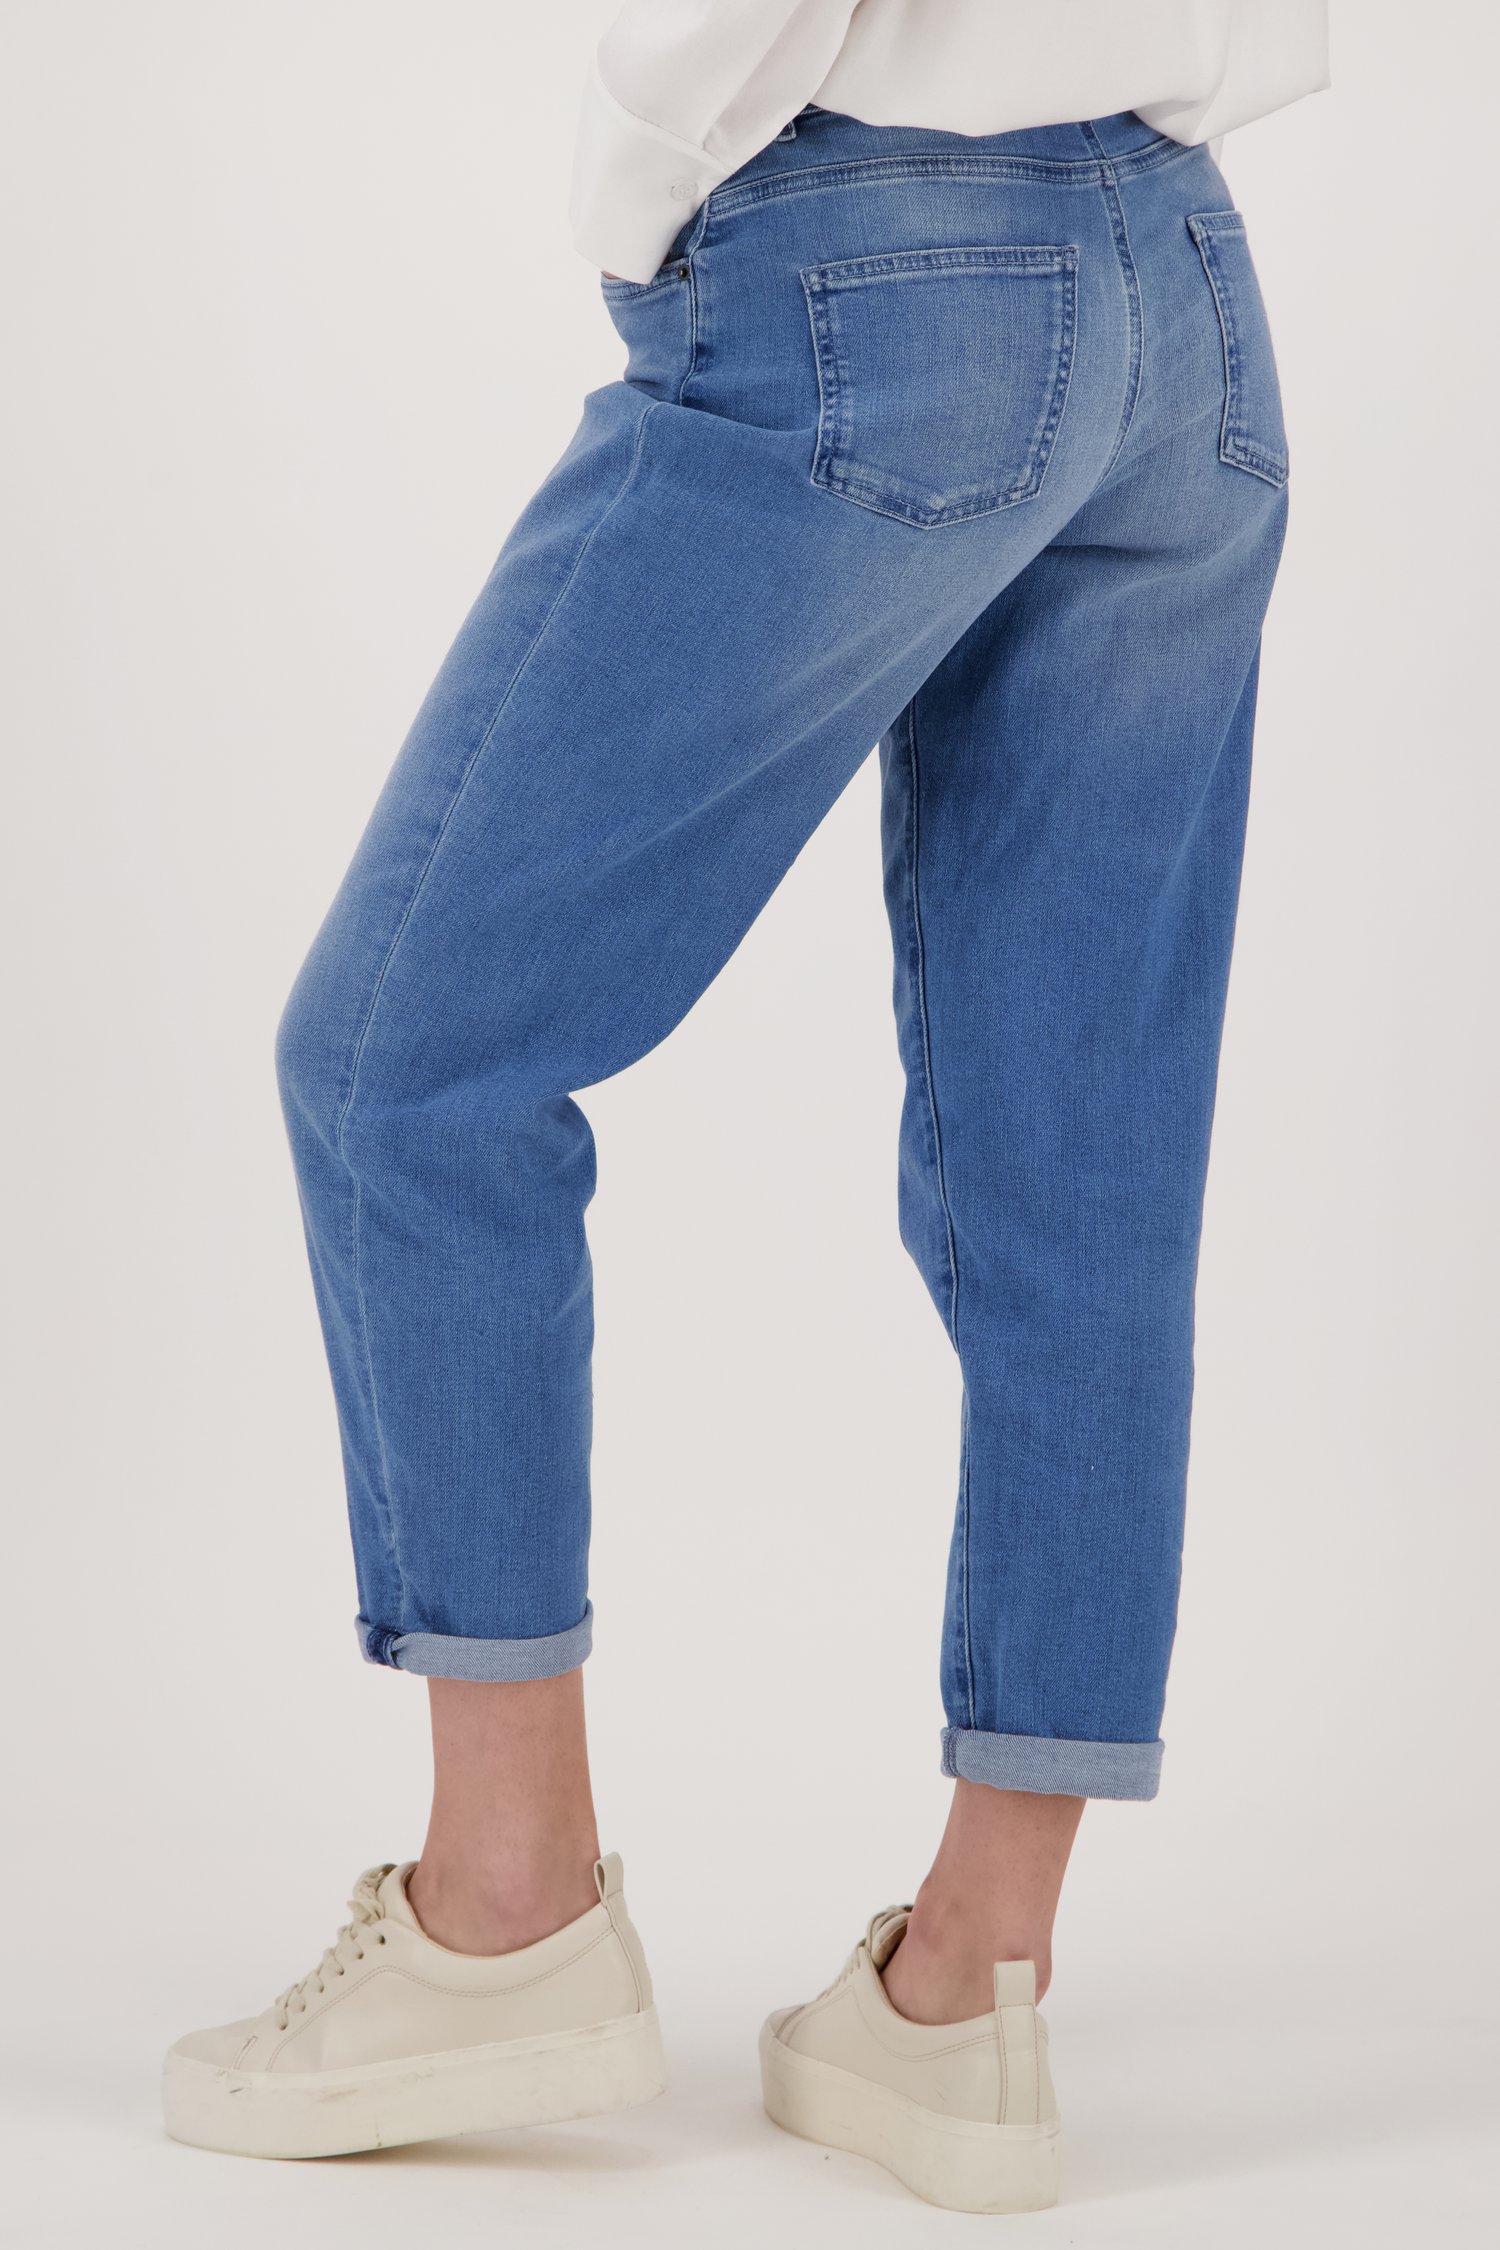 Lichtblauwe jeans - Marley - Mom fit van Island Denim | 3623251 | e5